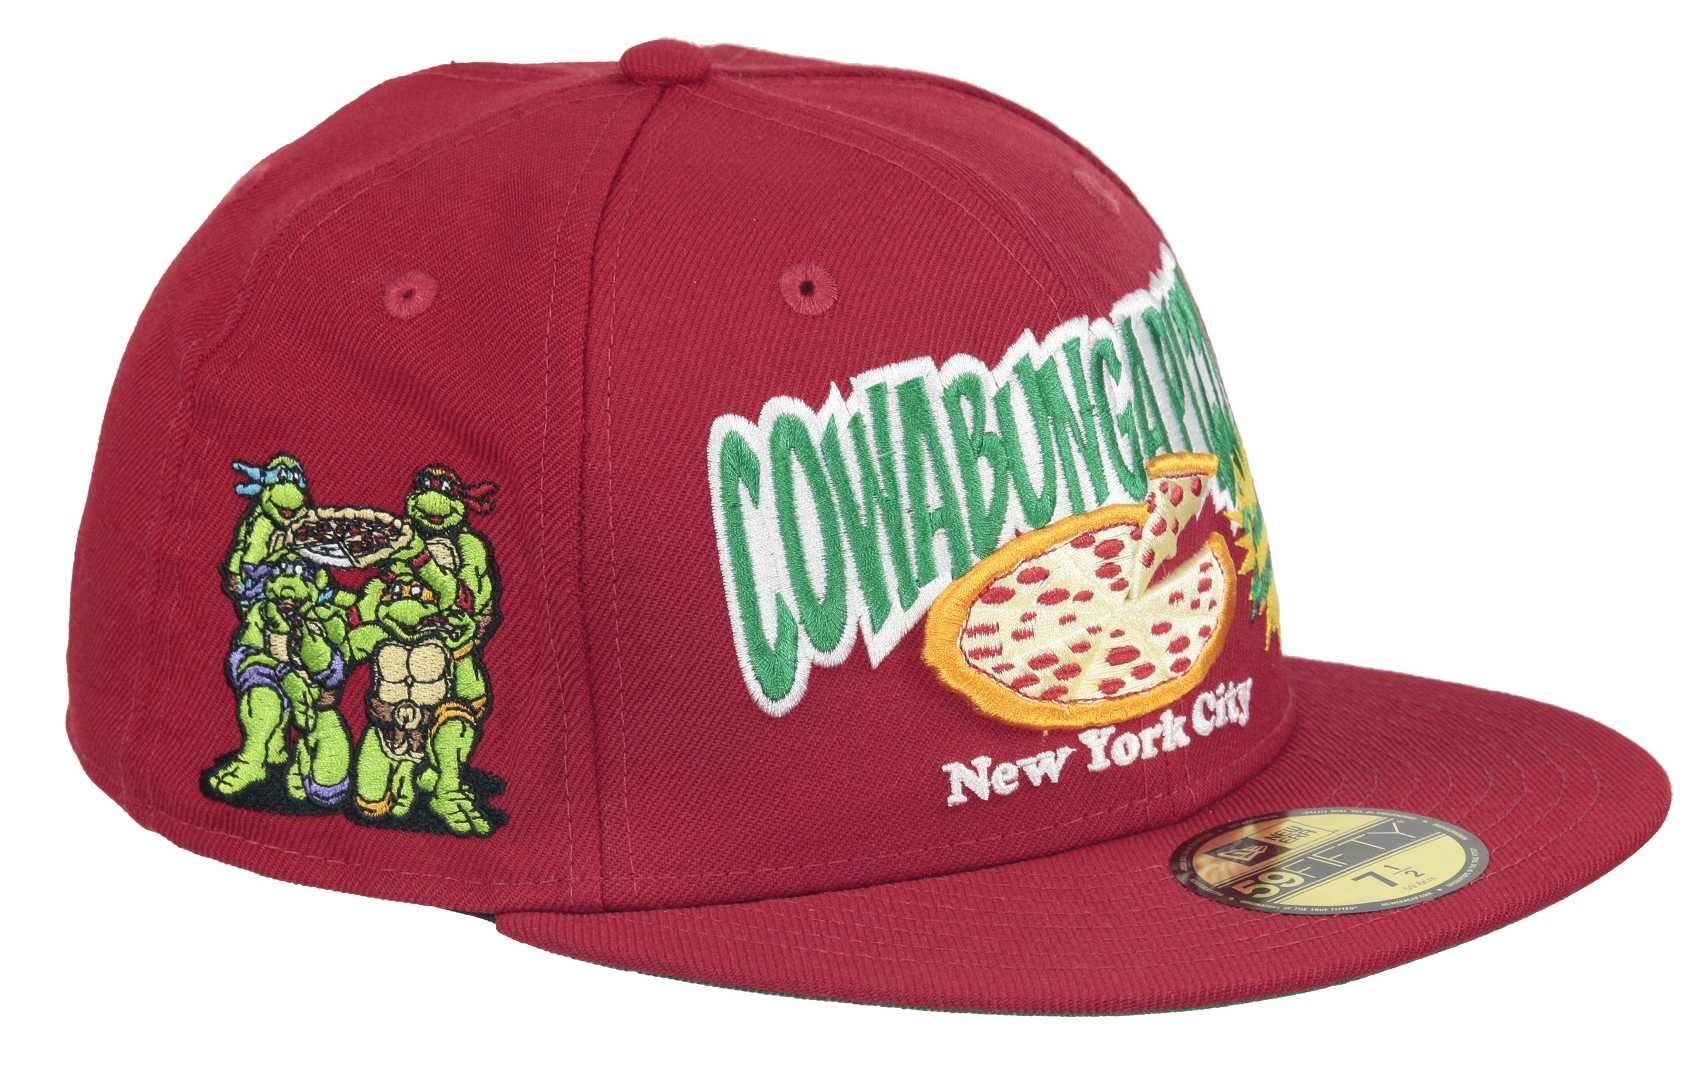 Cowabunga Pizza Ninja Turtles TMNT Edition Red 59Fifty New Era